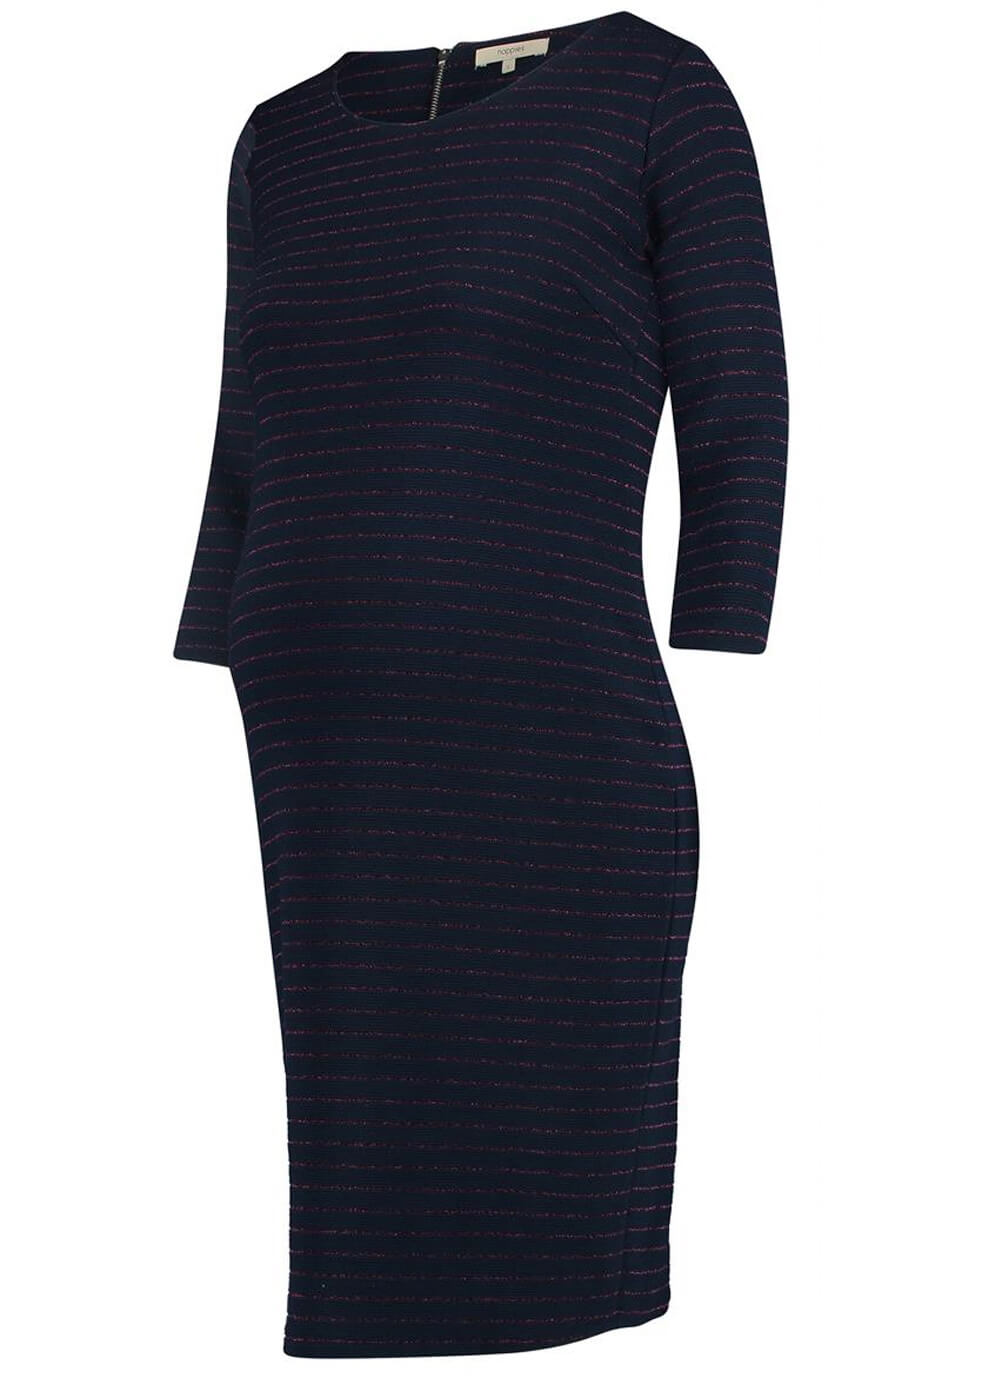 Morgan Lurex PIn-Stripe Dress in Dark Blue by Noppies